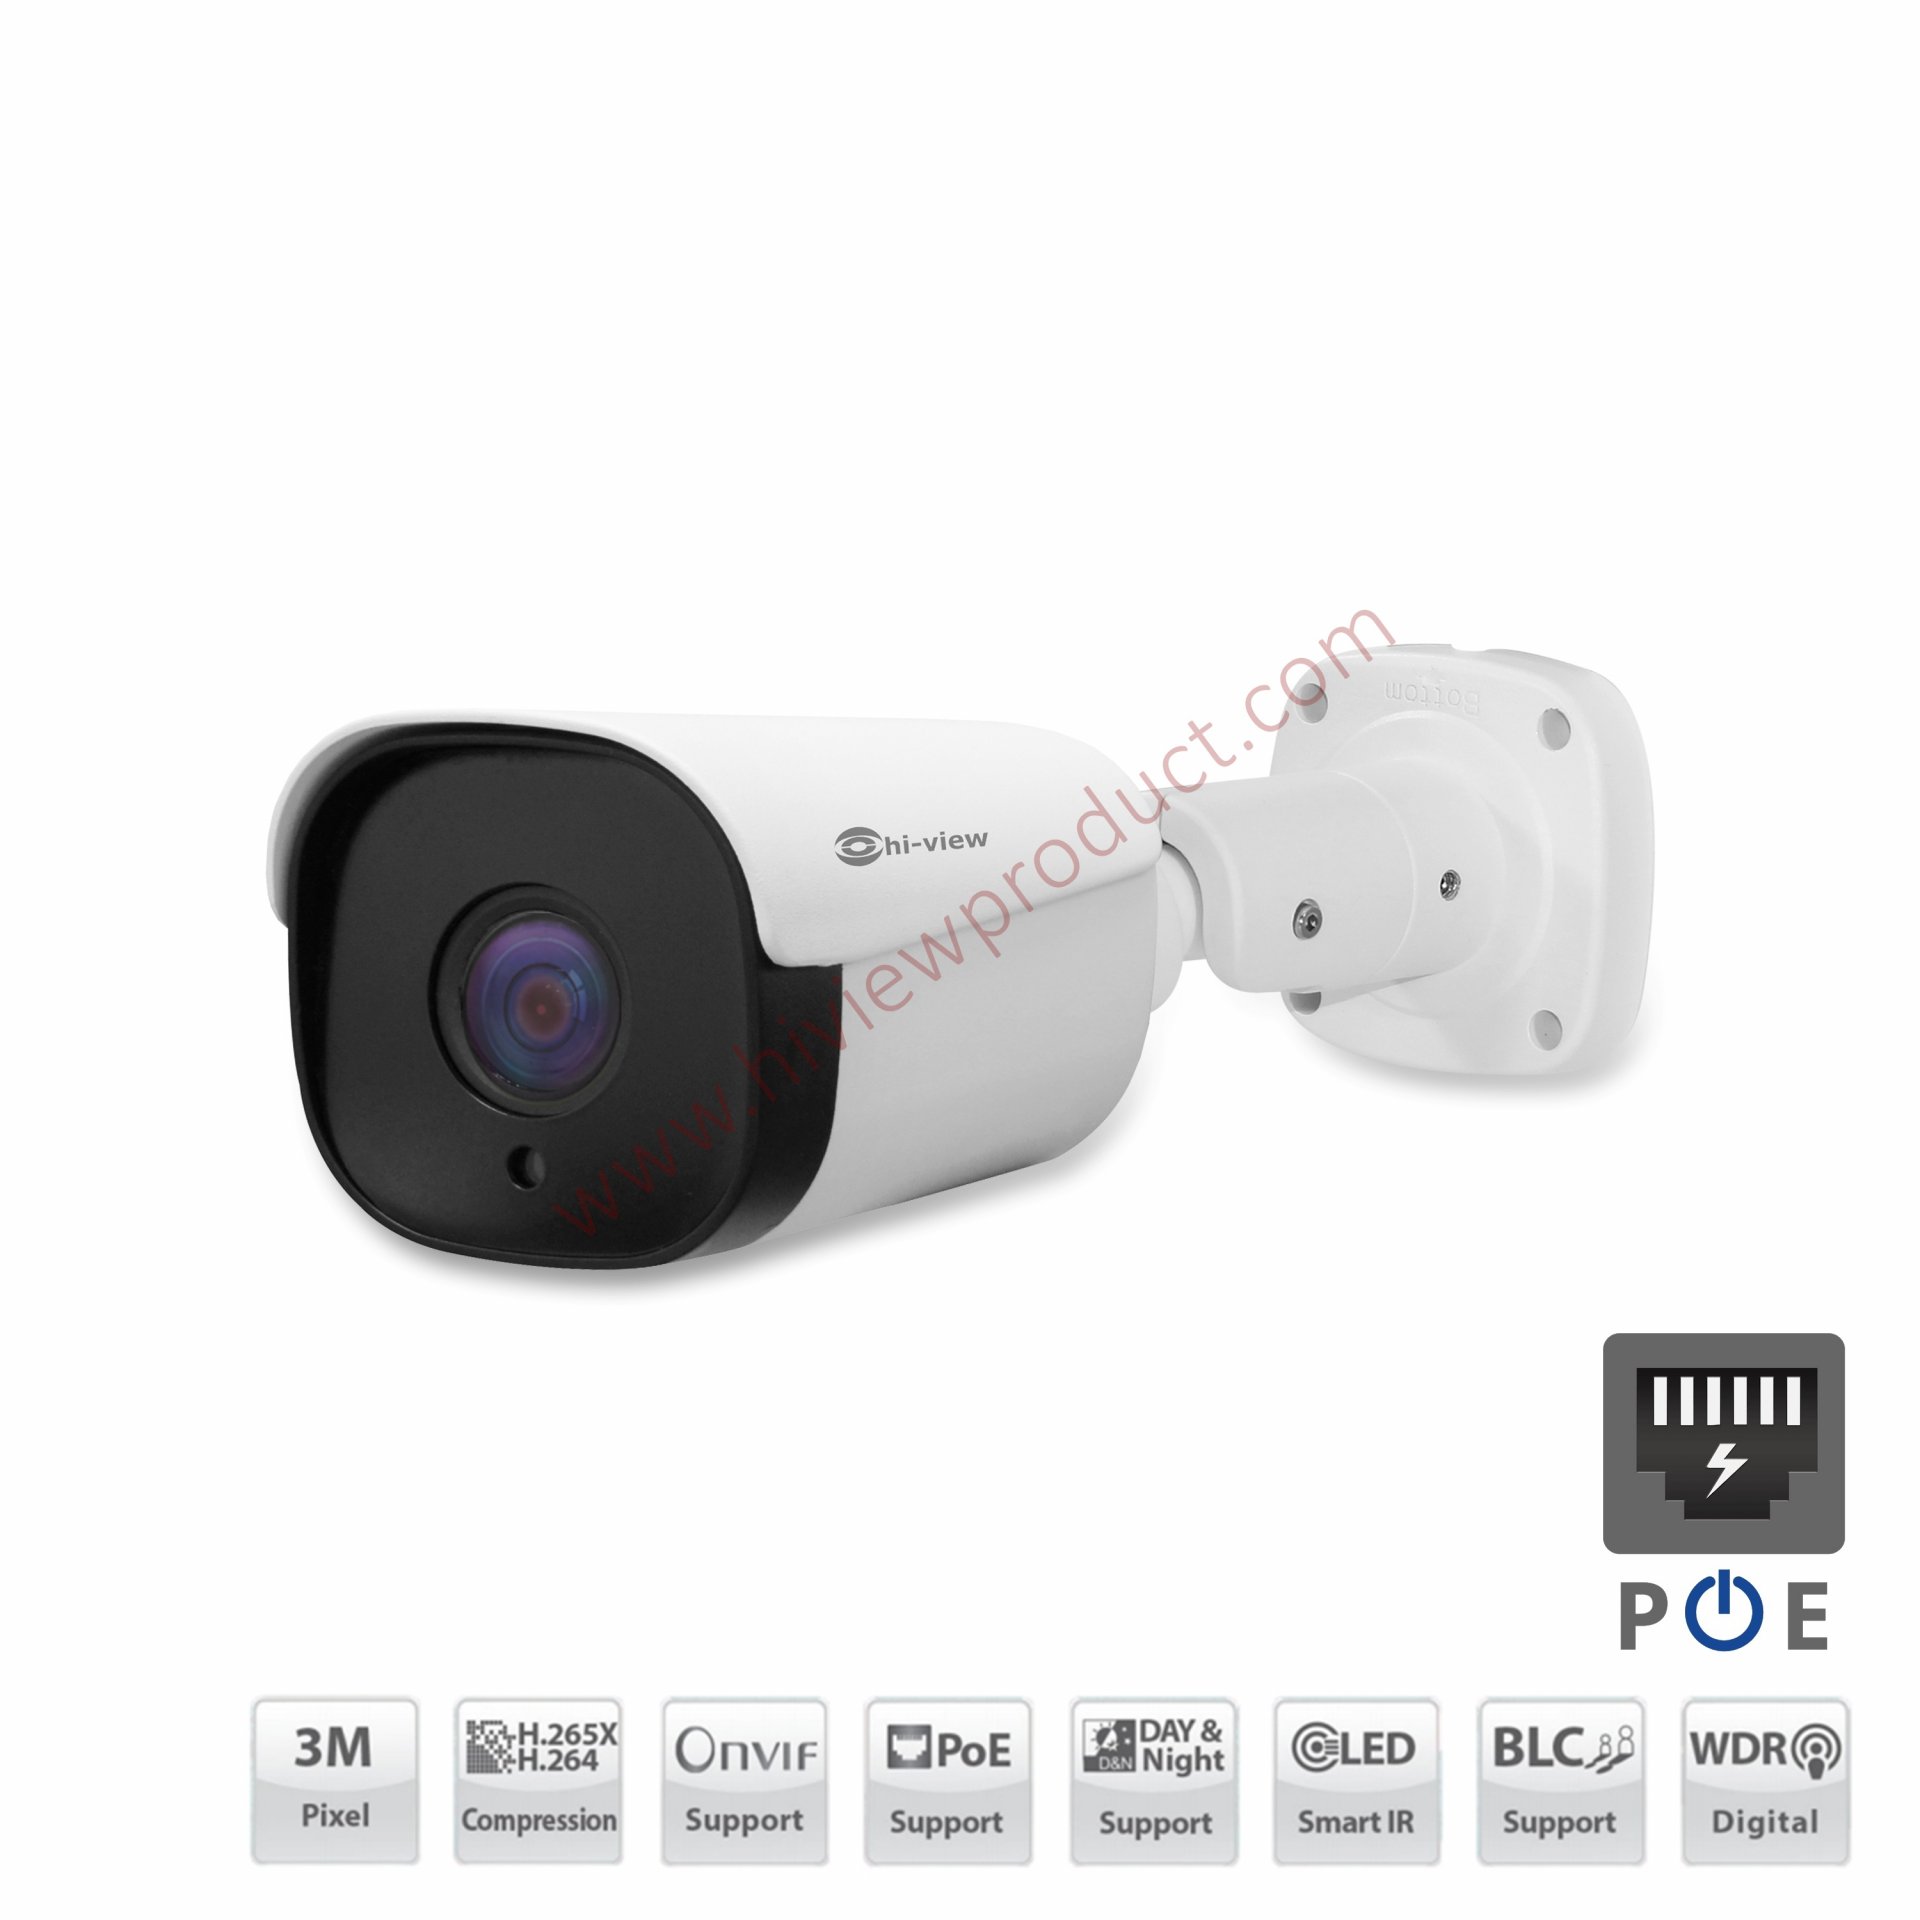 HP-55A30VPE กล้องวงจรปิดไฮวิว ระบบไอพี 3 ล้านพิกเซล ใช้งานภายนอกและภายใน สามารถปรับระยะเลนส์ได้ 2.8-12mm. Hiview Bullet Vari Focal Lens 2.8-12mm. IP Camera PoE 3 MP